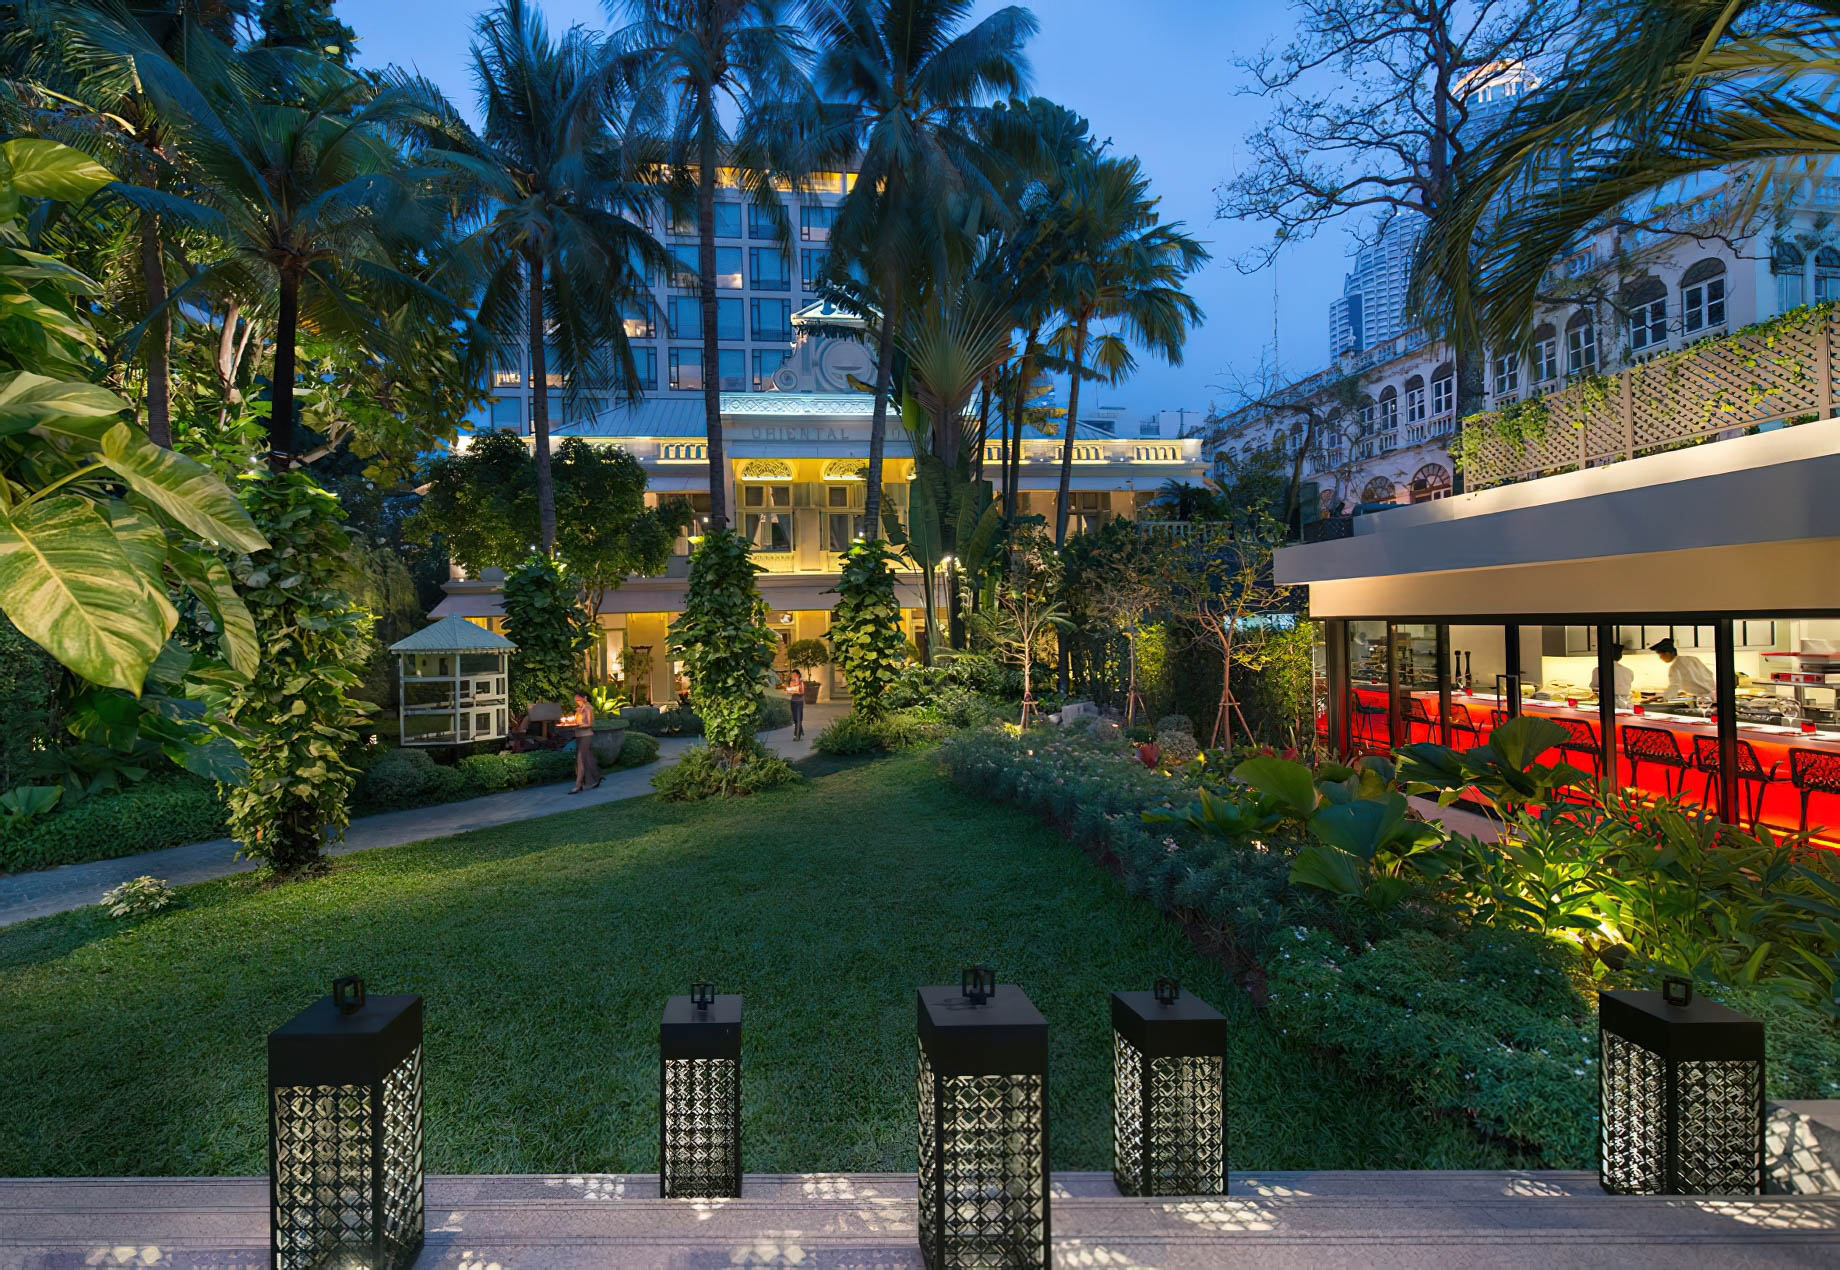 Mandarin Oriental, Bangkok Hotel - Bangkok, Thailand - Exterior Gardens Dusk